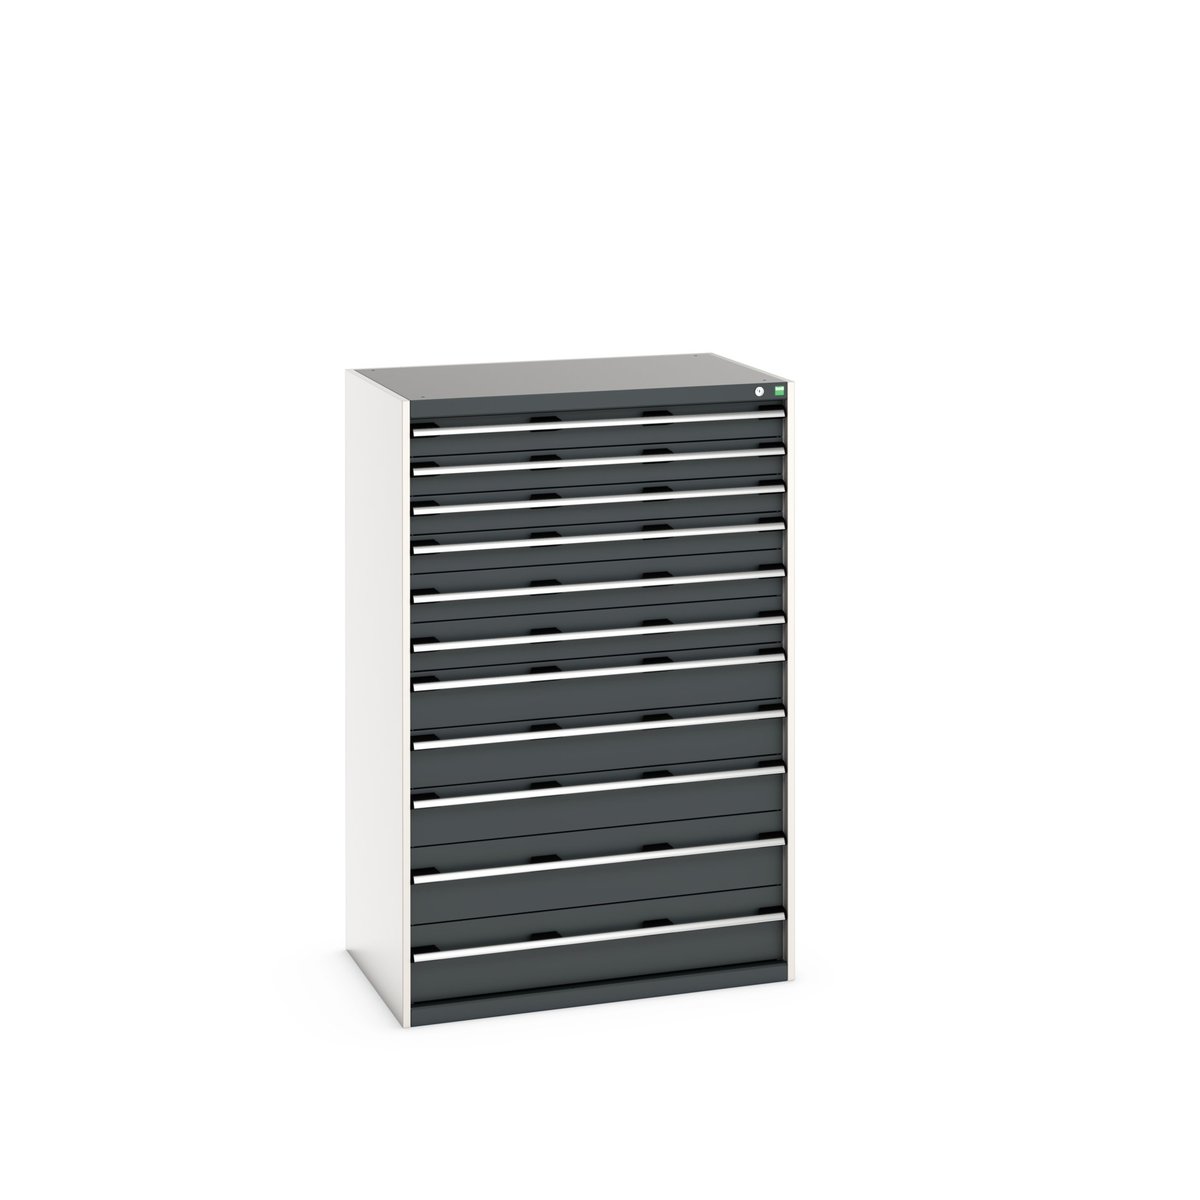 40029037. - cubio drawer cabinet